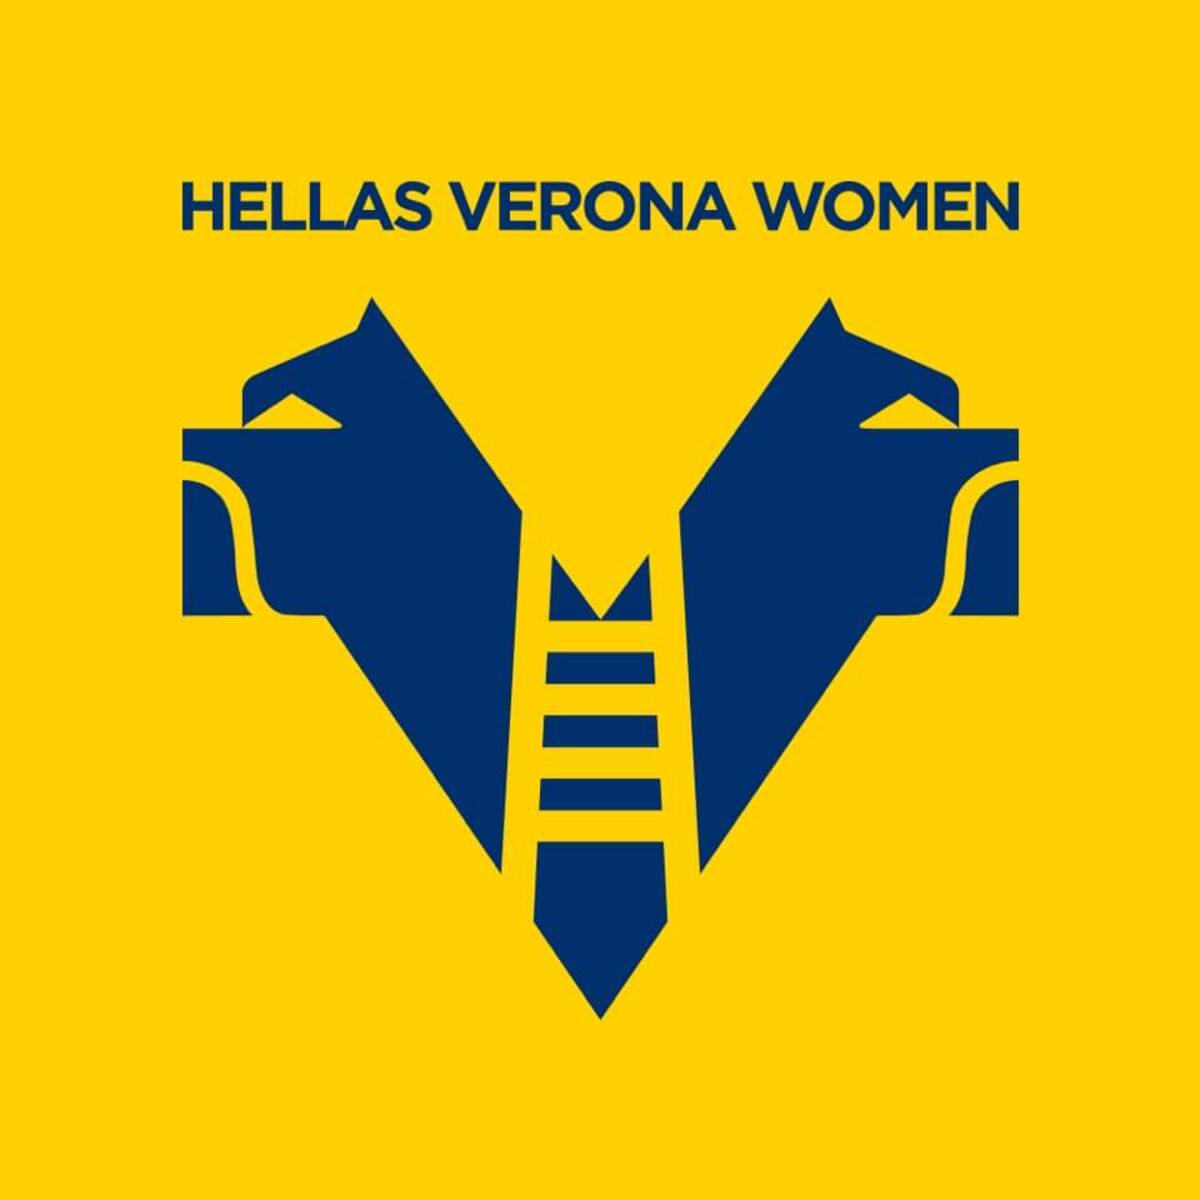 hellas-verona-women-14-football-club-facts